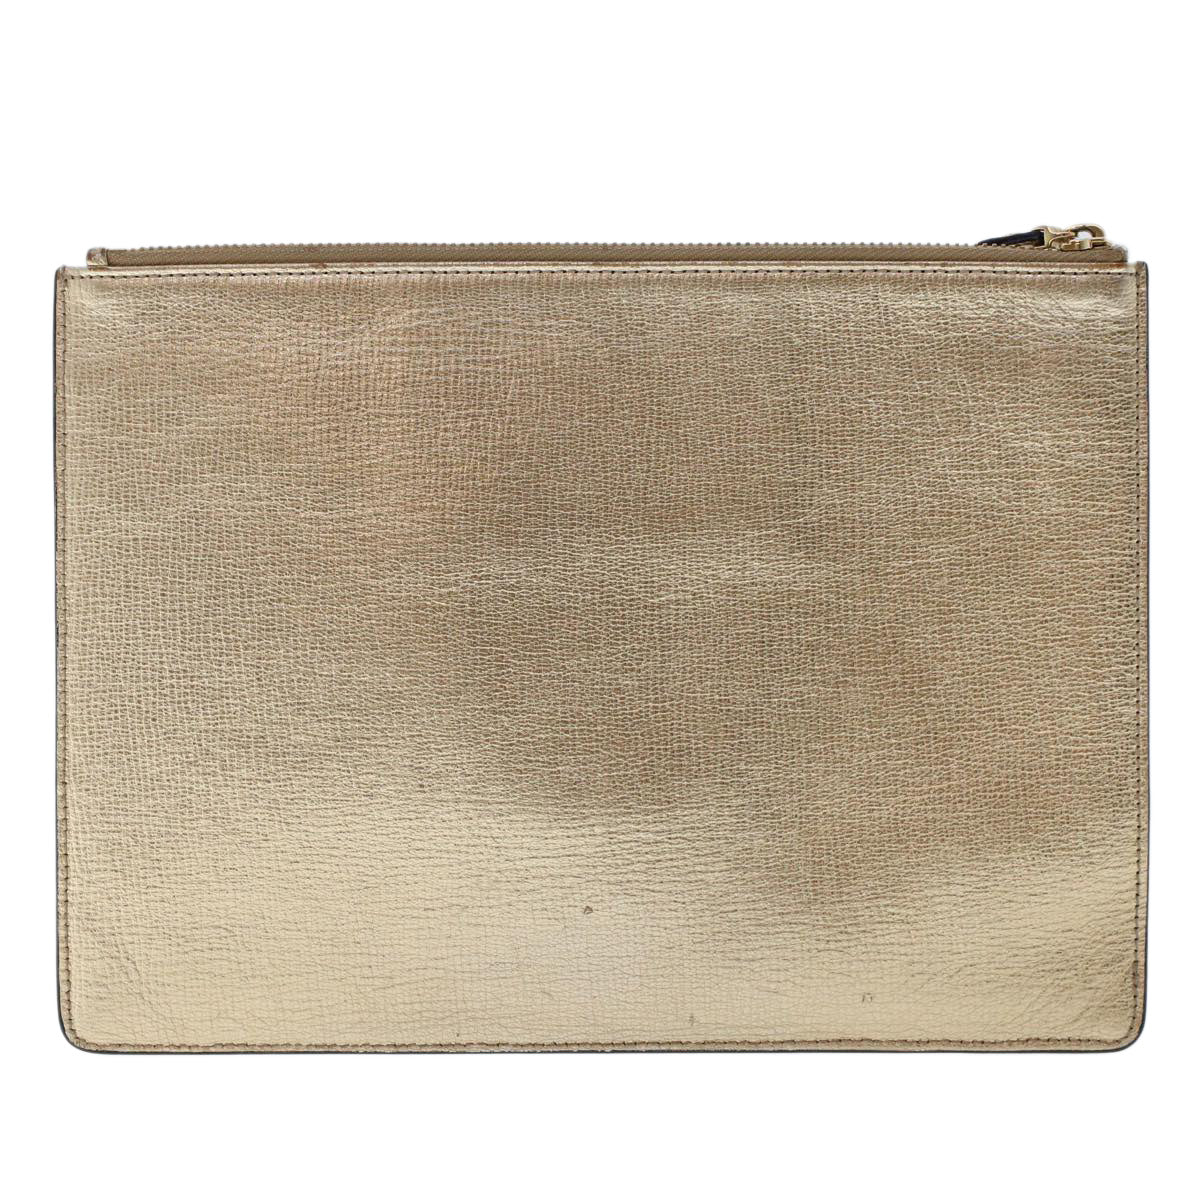 Salvatore Ferragamo Clutch Bag Leather Gold Auth 50189 - 0